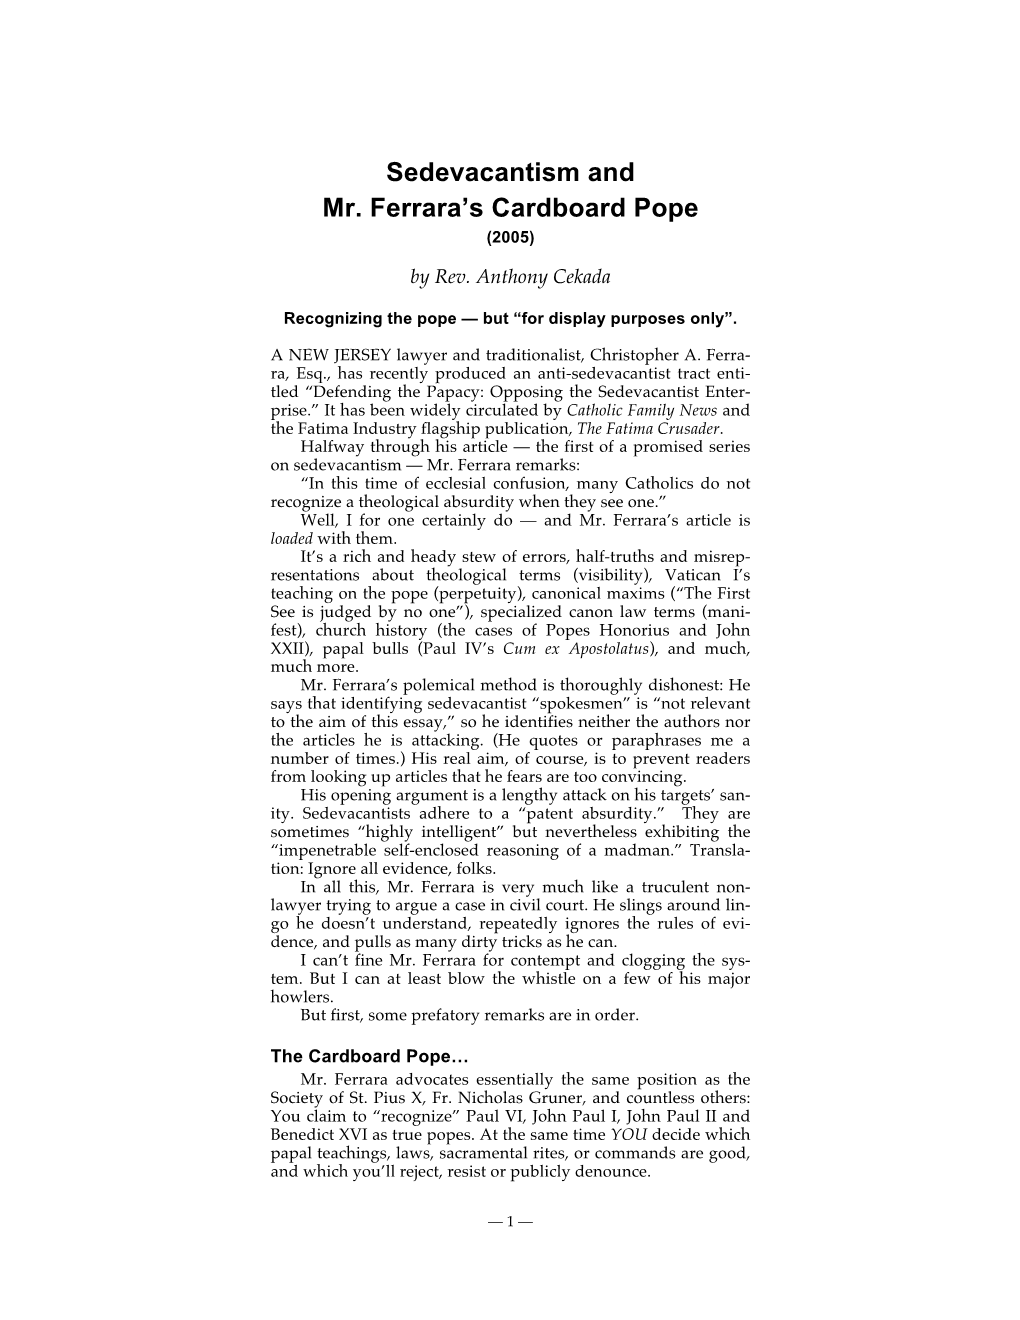 Sedevacantism and Mr. Ferrara's Cardboard Pope